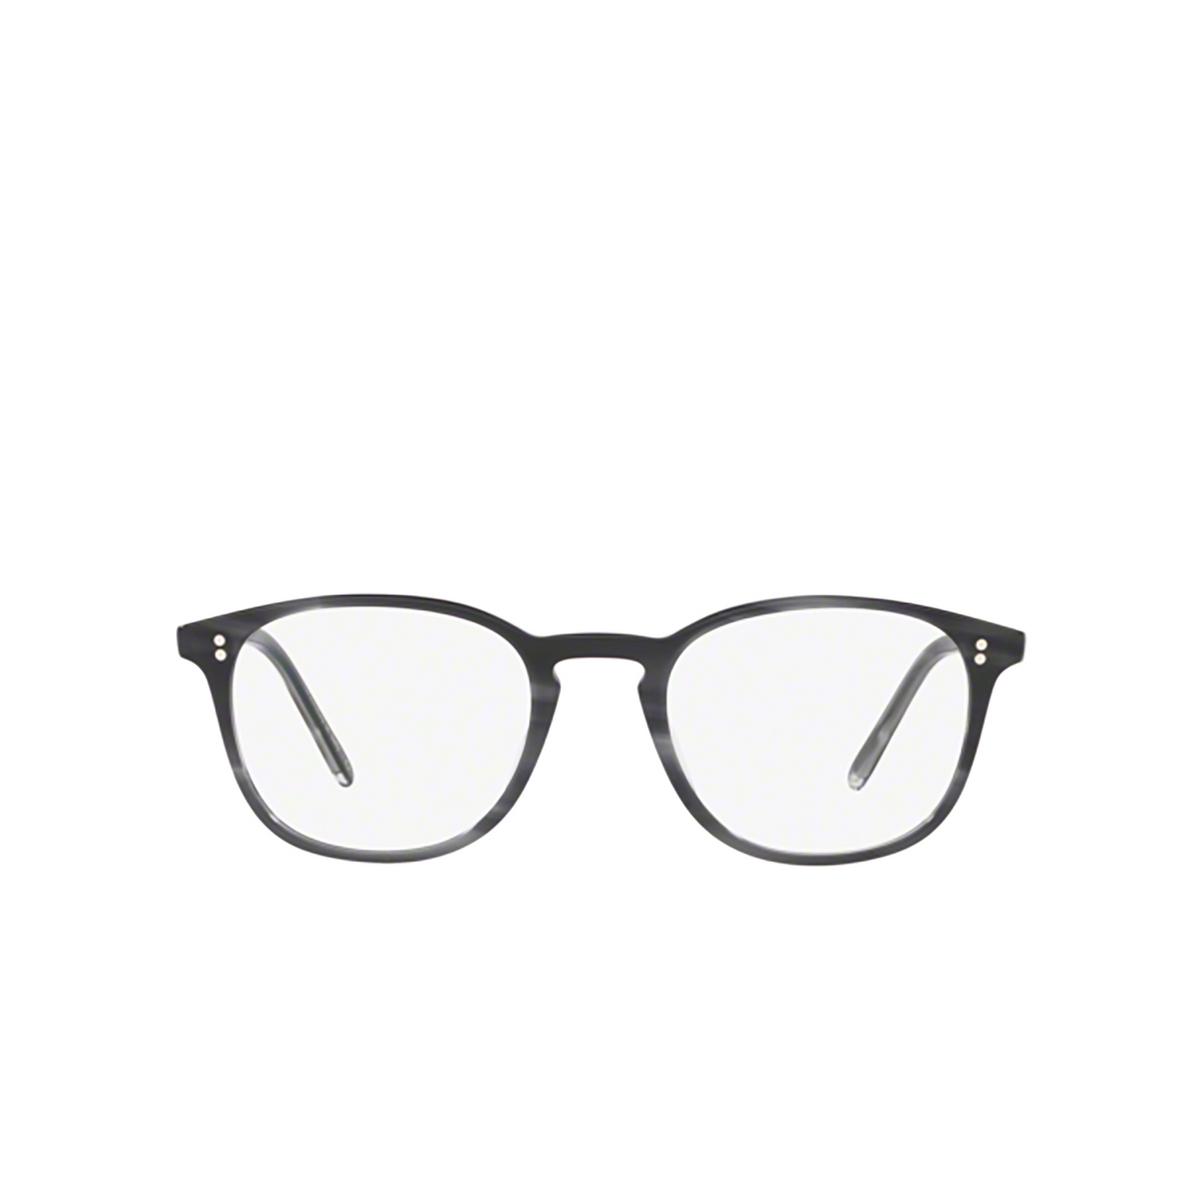 Oliver Peoples FINLEY VINTAGE Eyeglasses 1661 Charcoal Tortoise - front view